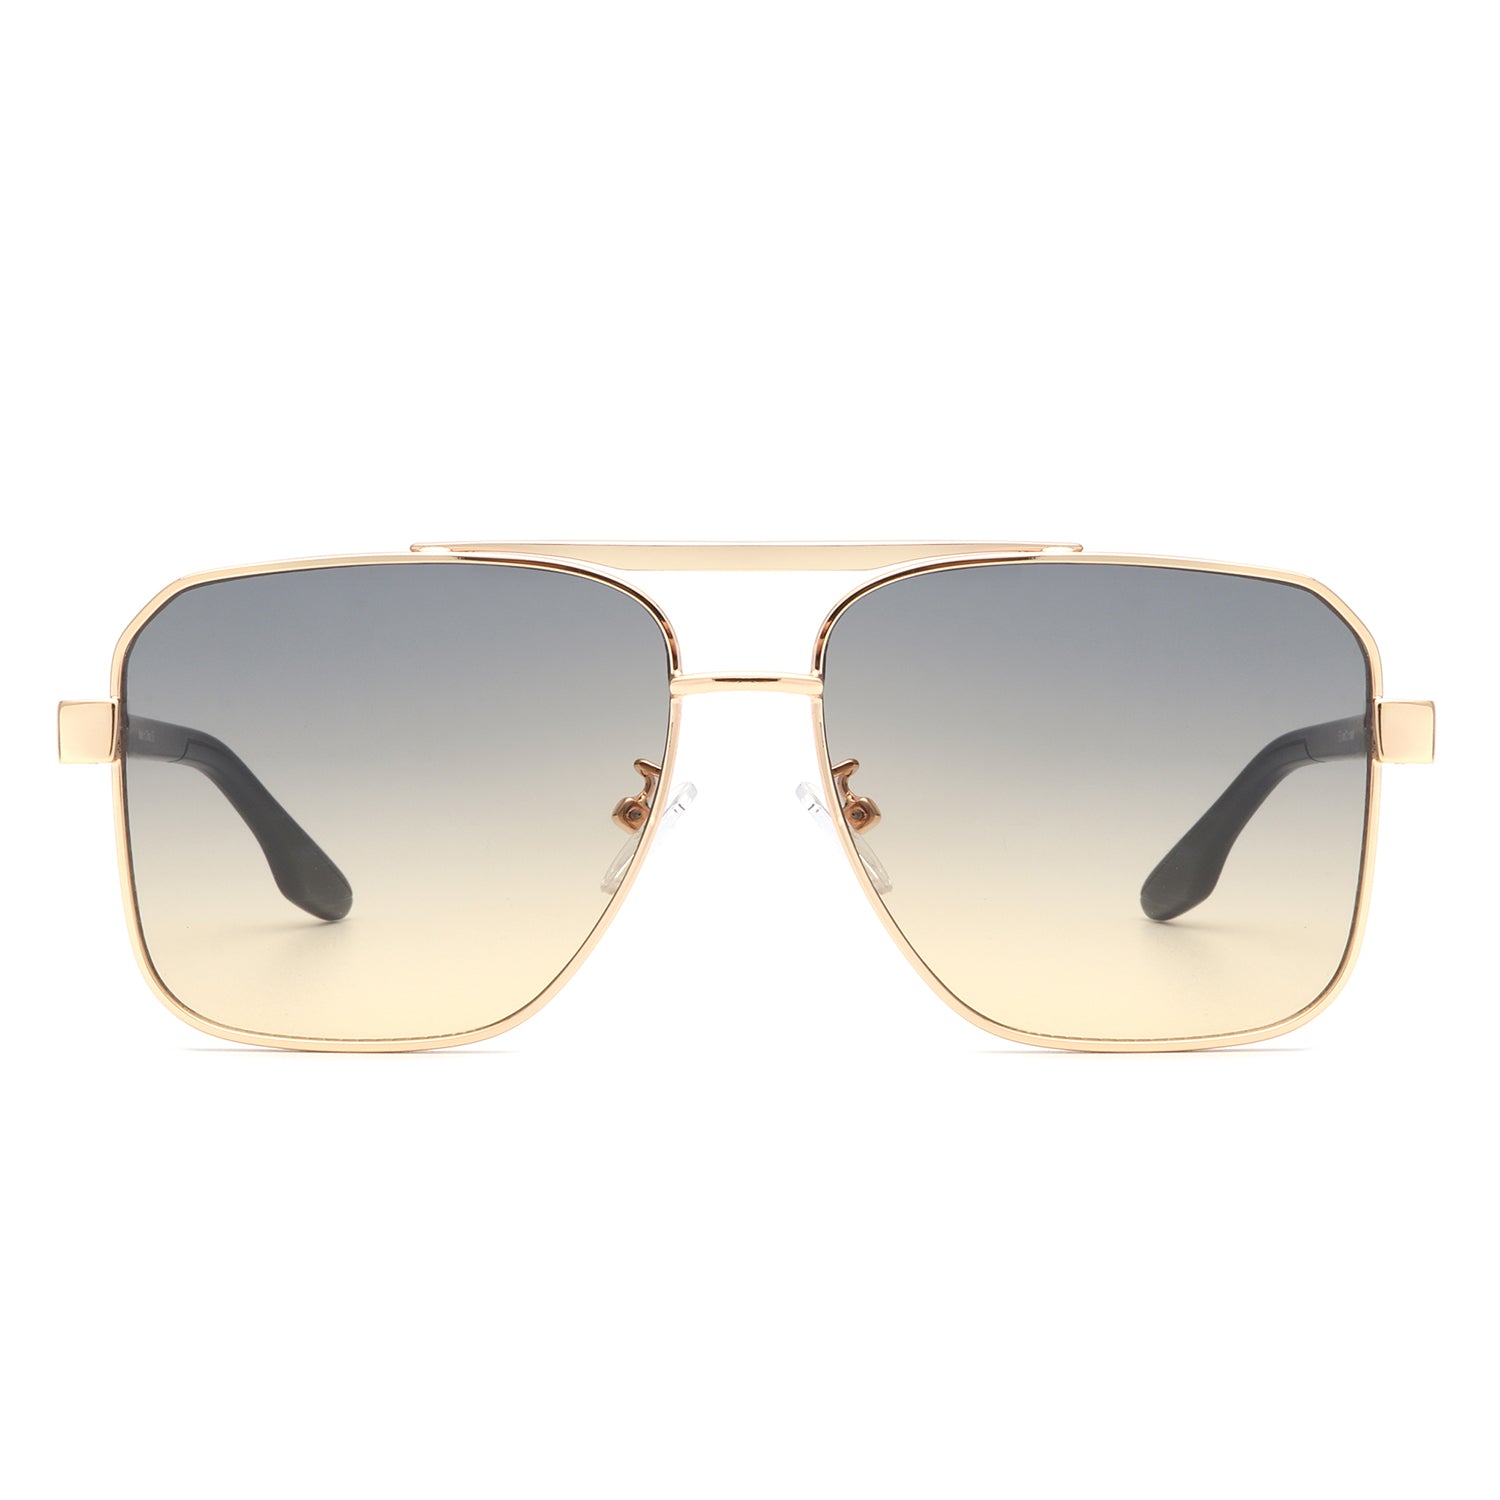 J2036 - Square Flat Top Brow-Bar Tinted Fashion Wholesale Sunglasses